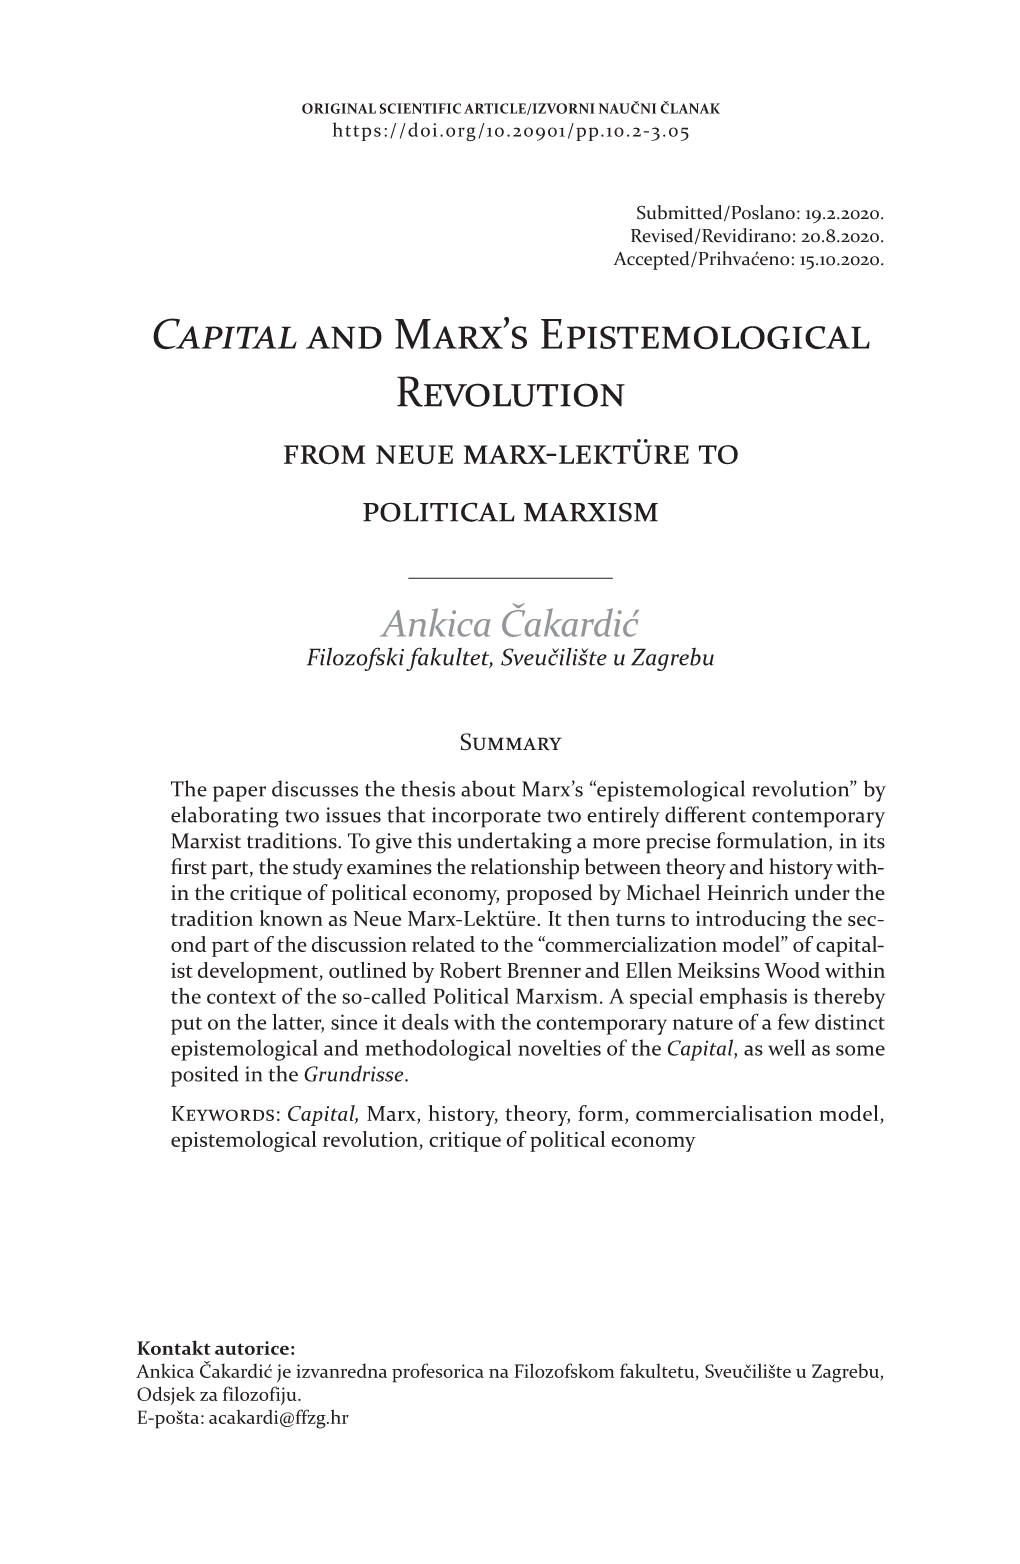 Capital and Marx's Epistemological Revolution